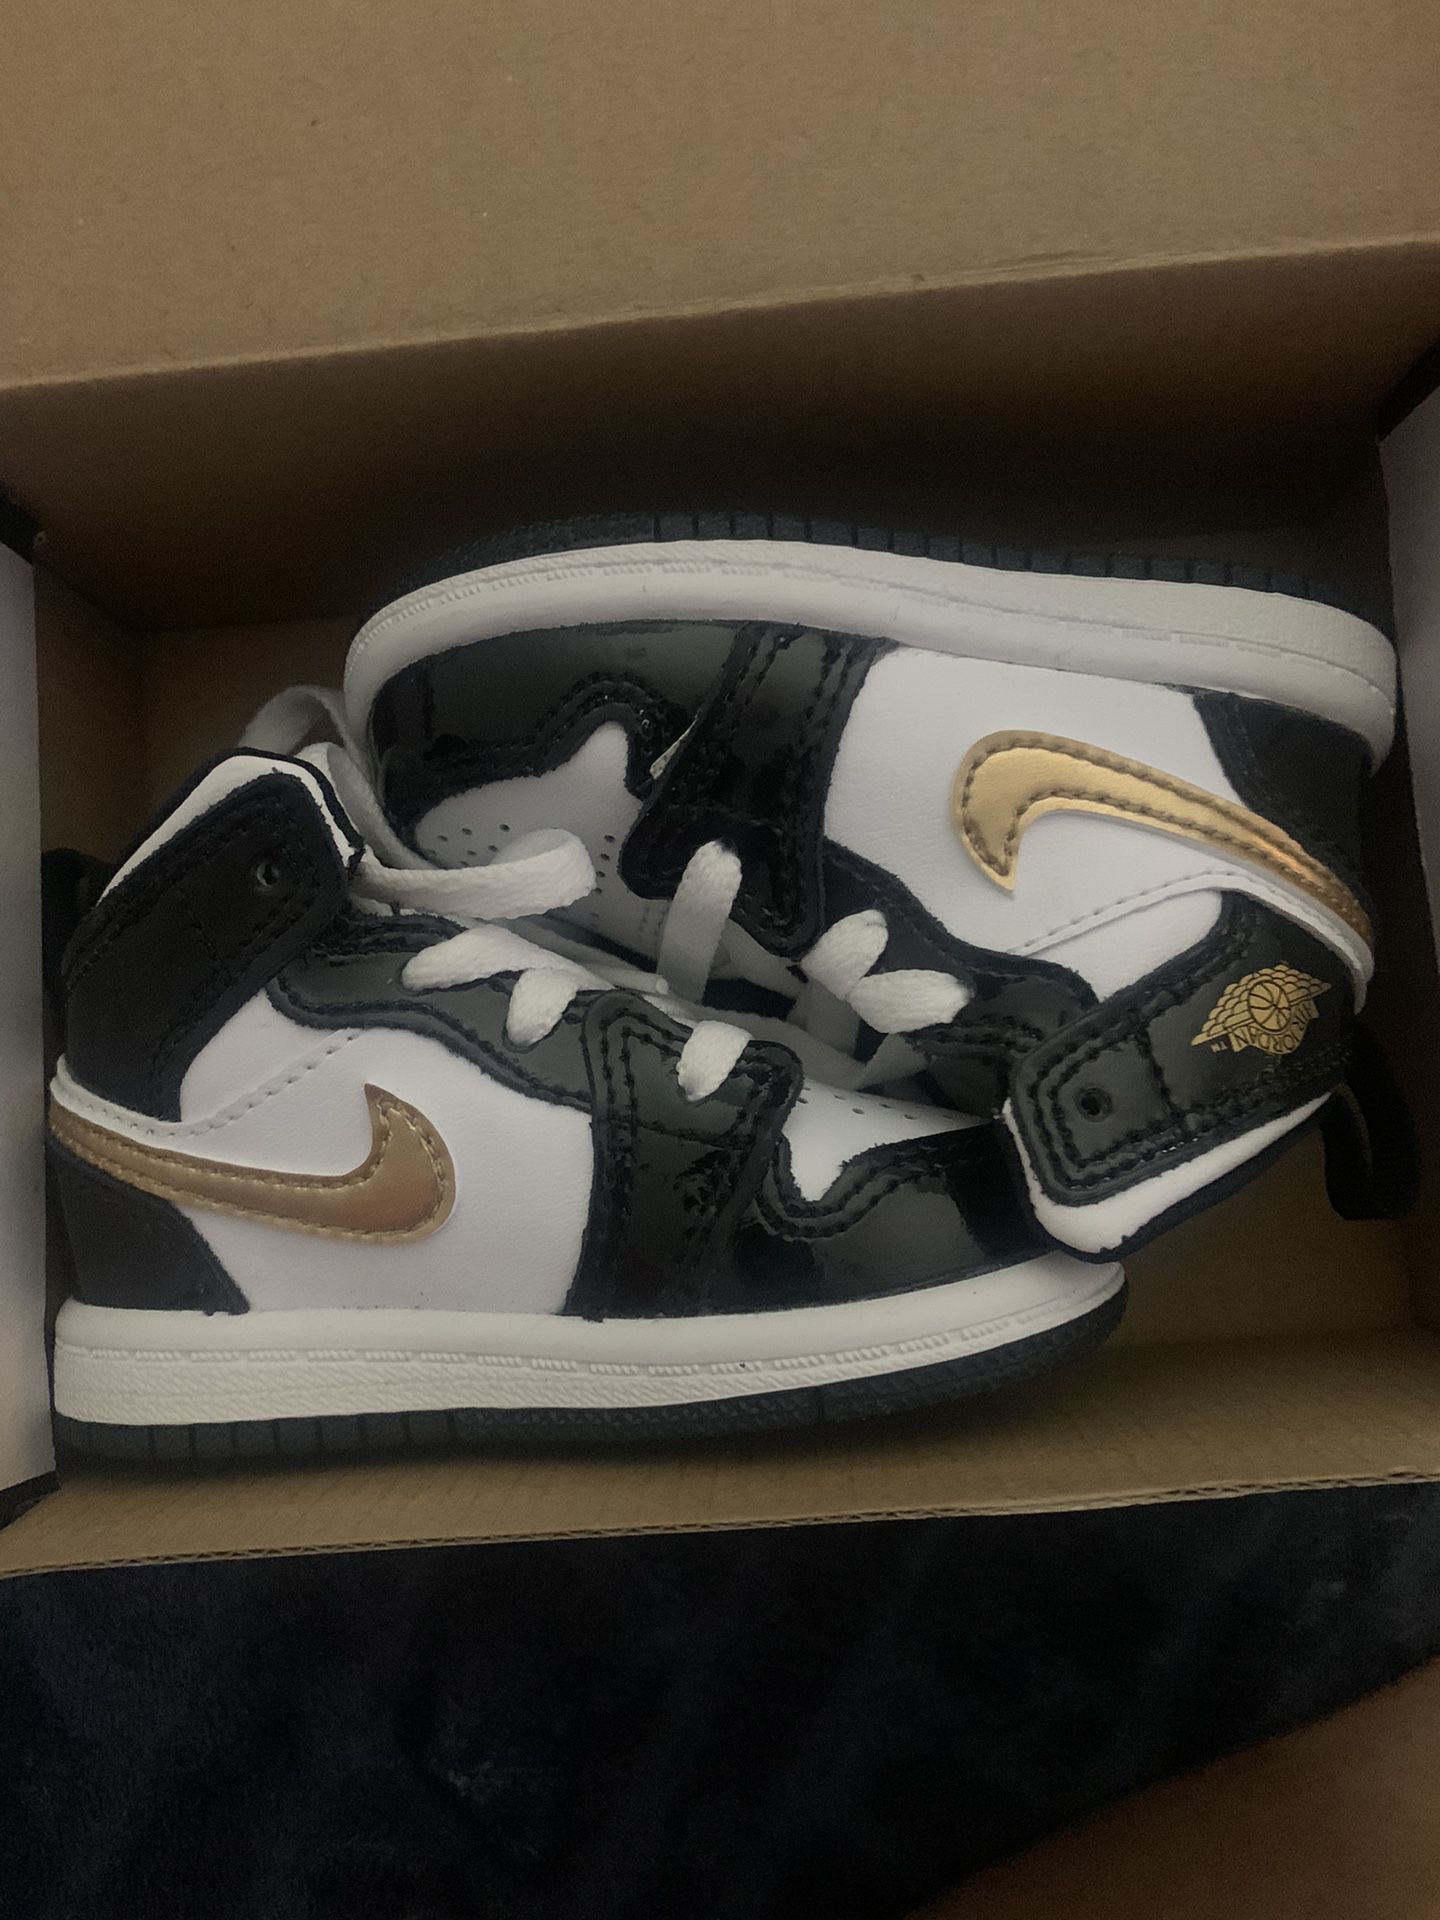 Baby Jordan 1 Black And Gold Size 4C